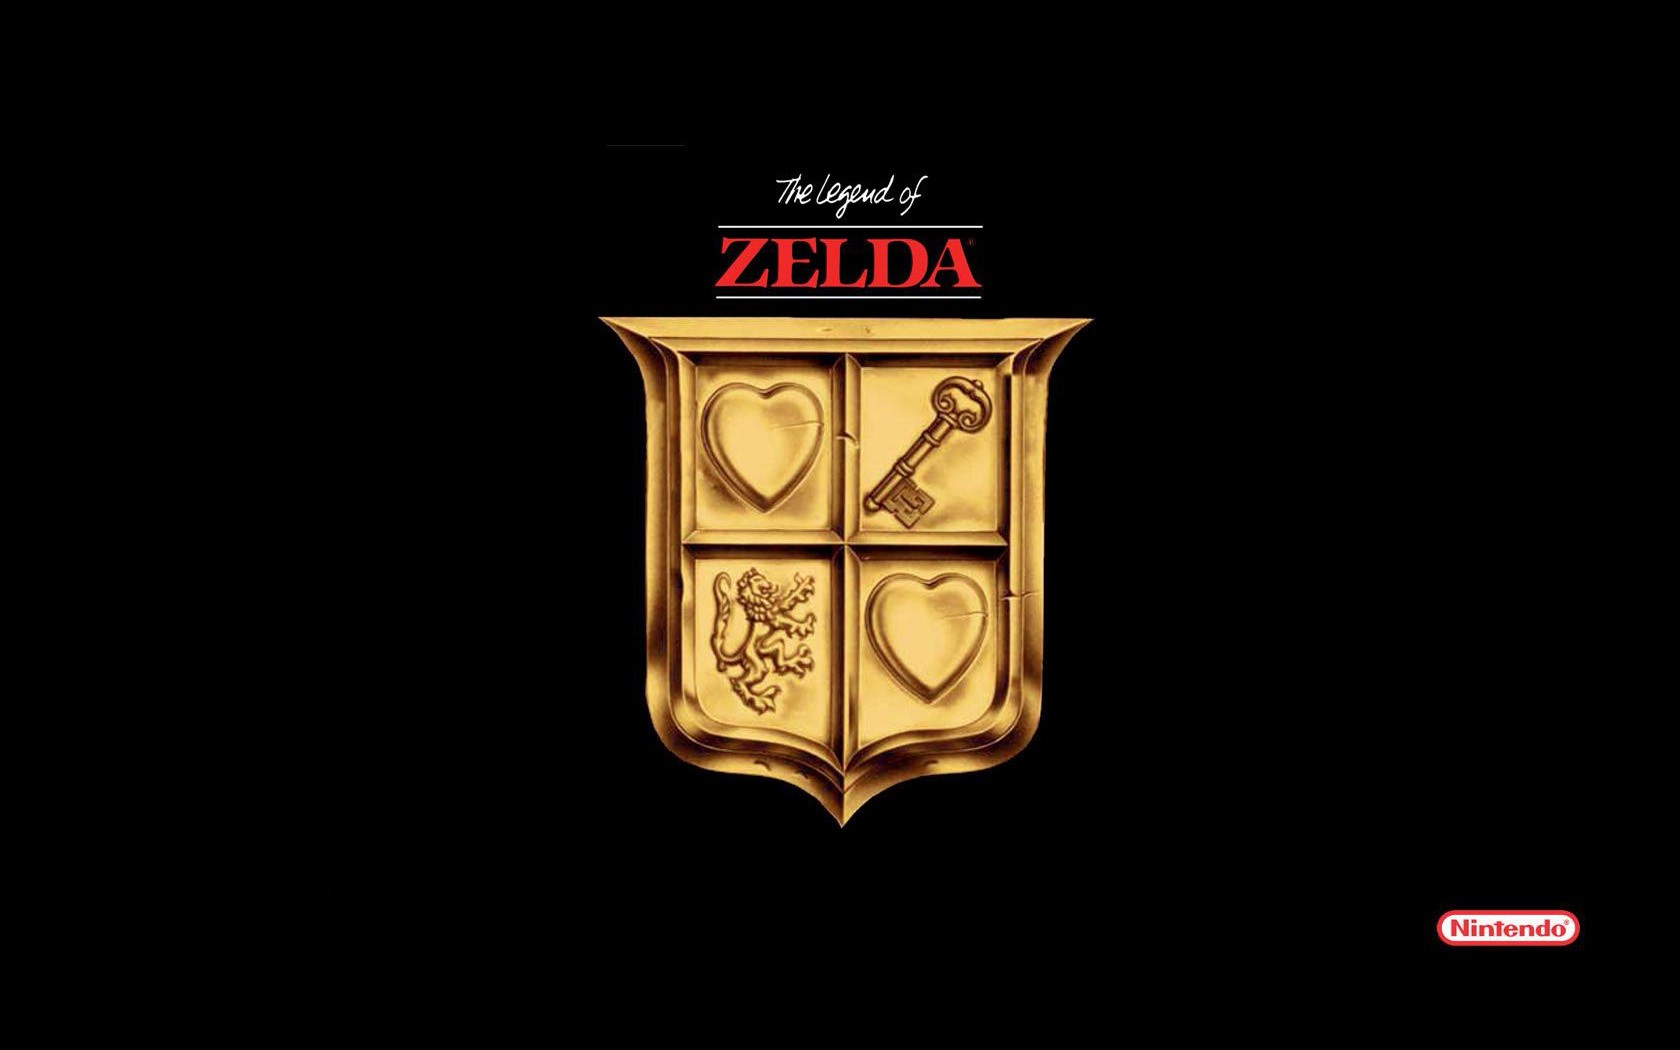 General 1680x1050 Nintendo The Legend of Zelda video games simple background black background